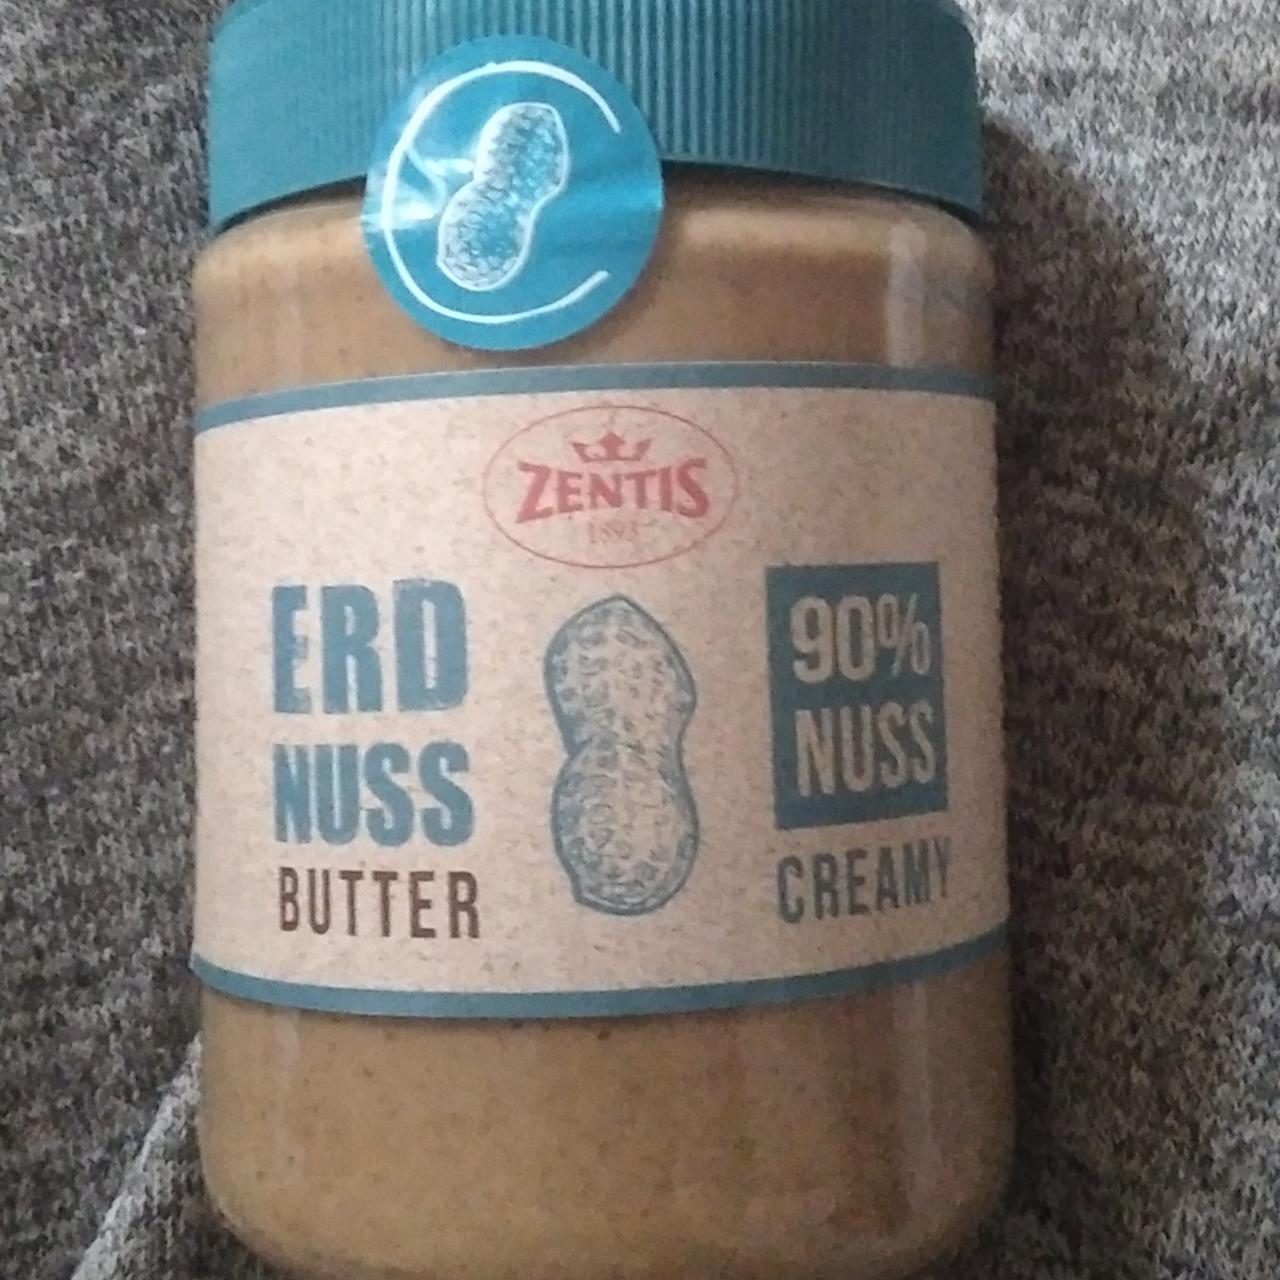 Фото - Erdnüsse Butter 90% nuss creamy Zentis